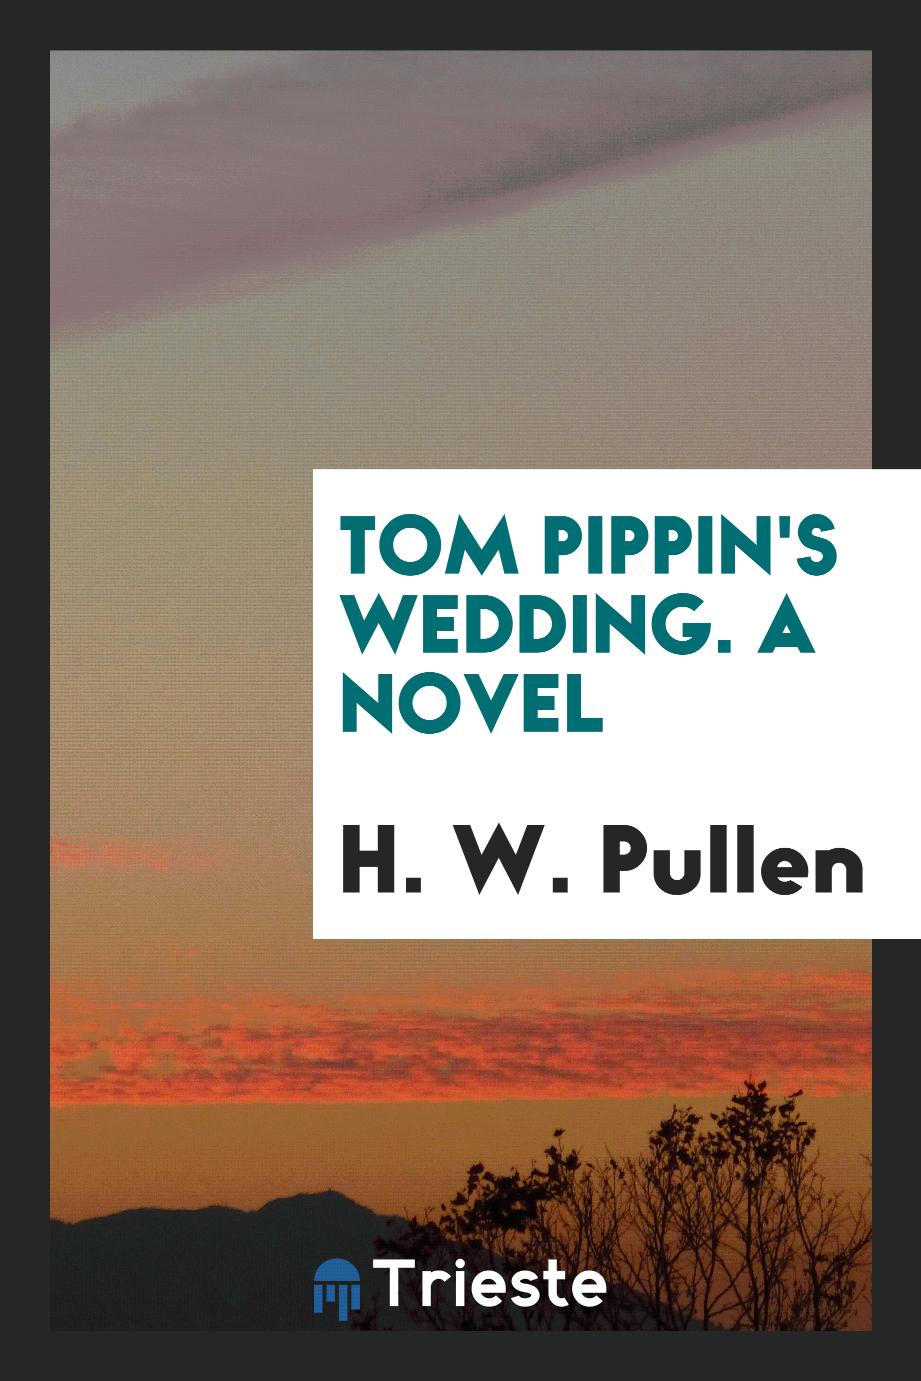 Tom Pippin's wedding. A novel